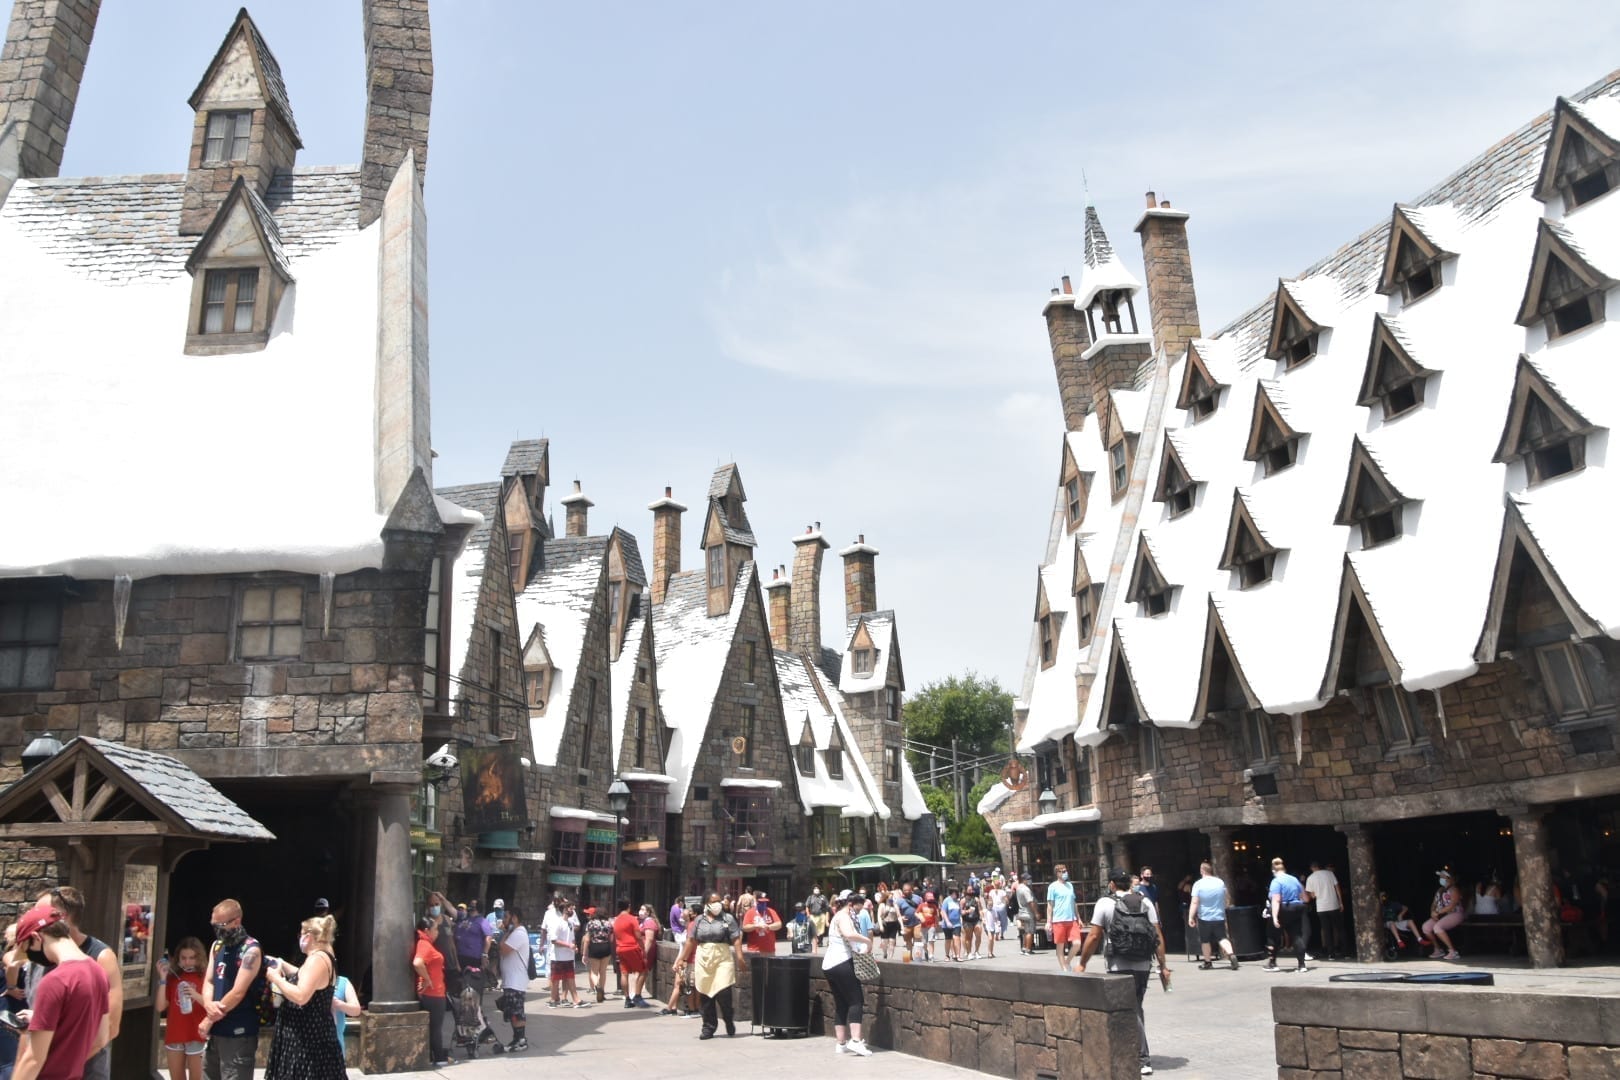 Universal Studios VS. Islands of Adventure – The Wizarding World of Harry Potter